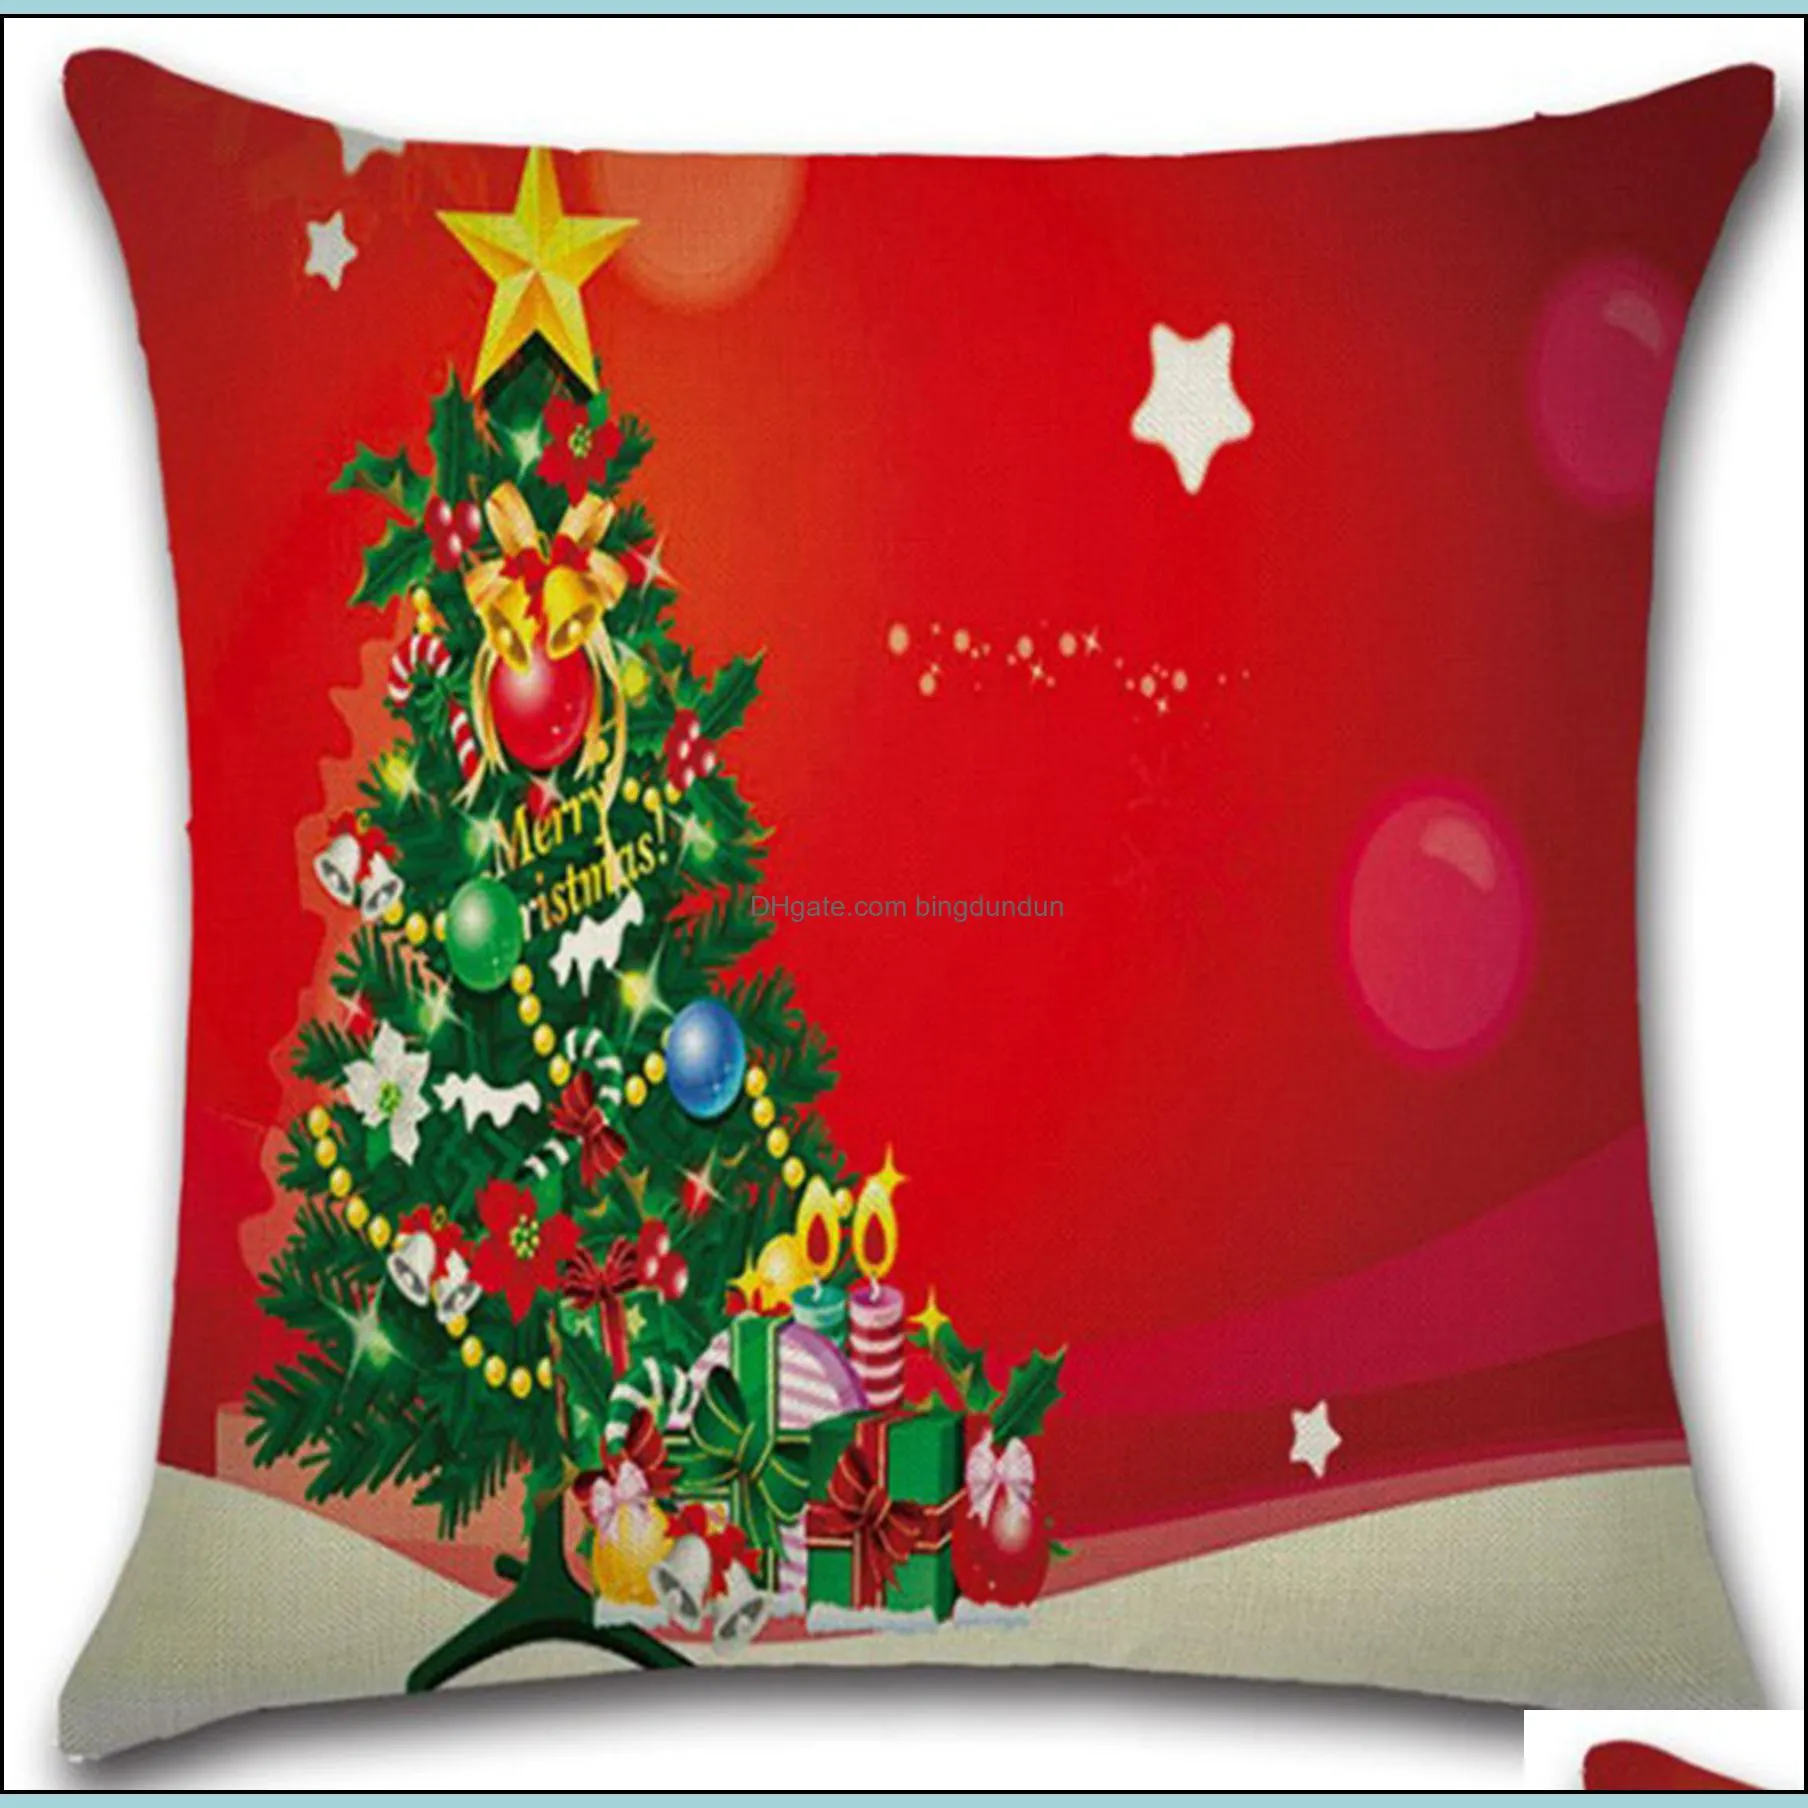 santa claus crystal ball pillow cushion cover cross border popular car decorative pillow case